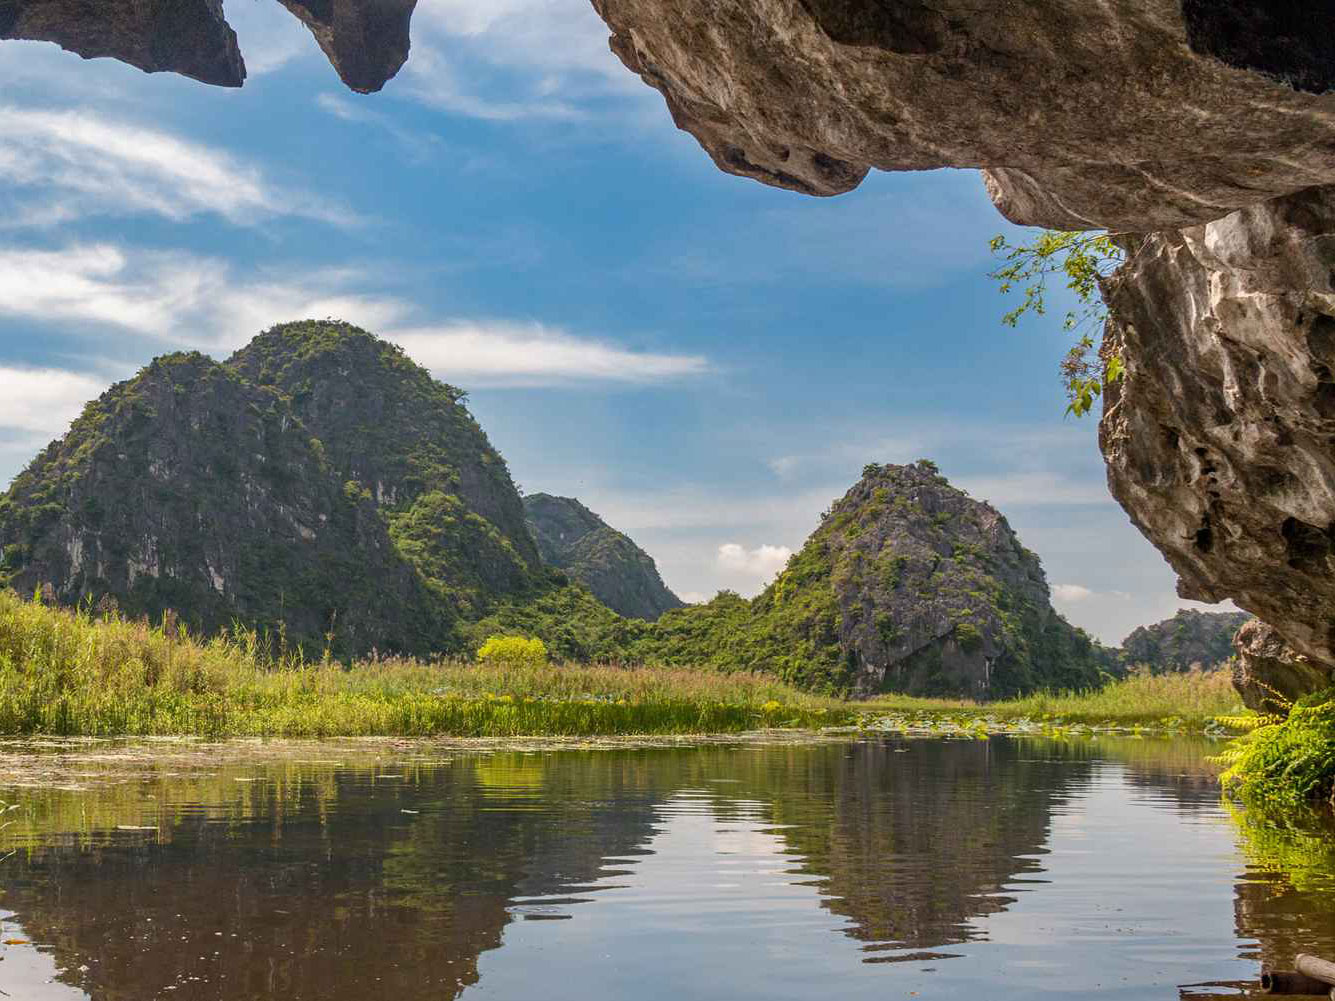 Van Trinh Cave – The Biggest Save in Ninh Binh